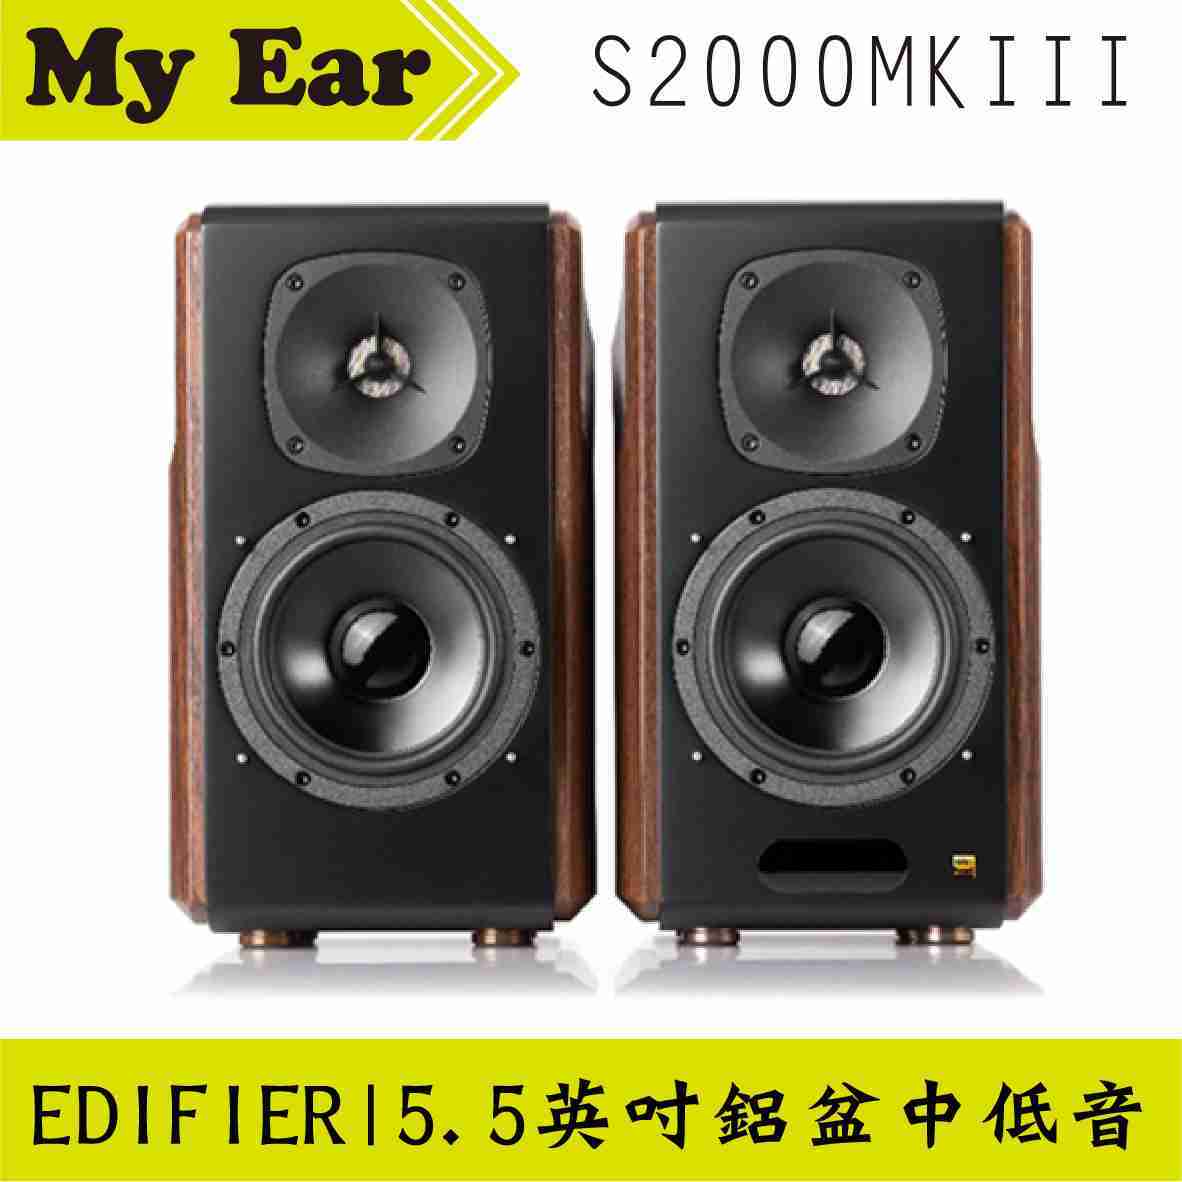 EDIFIER 漫步者S2000MKIII 雙DSP 主動式 喇叭 | My Ear 耳機專門店